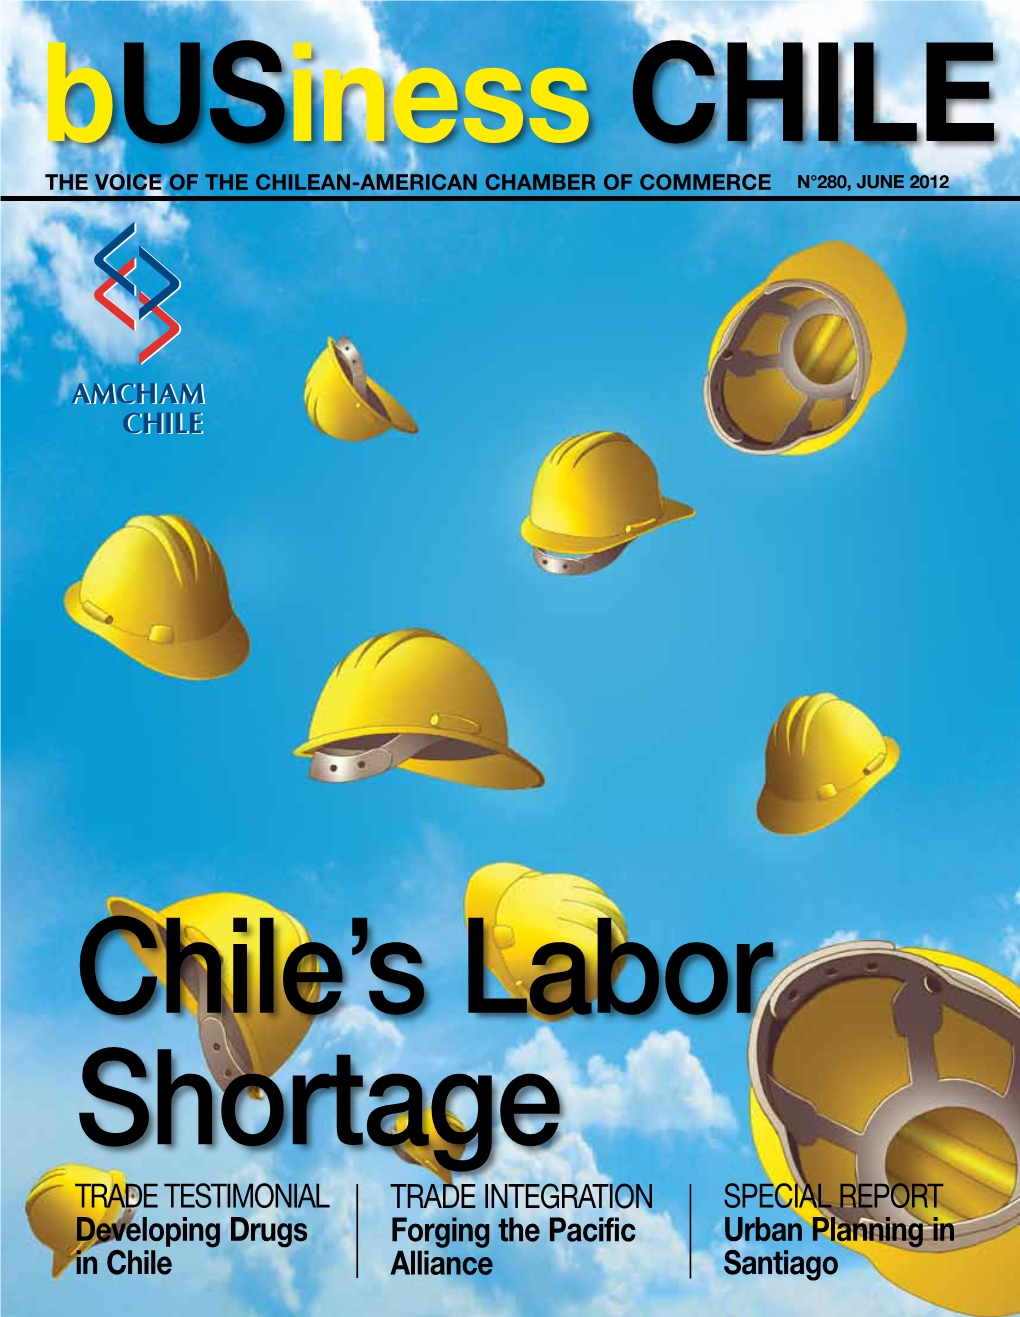 Trade Testimonial Developing Drugs in Chile Trade Integration Forging